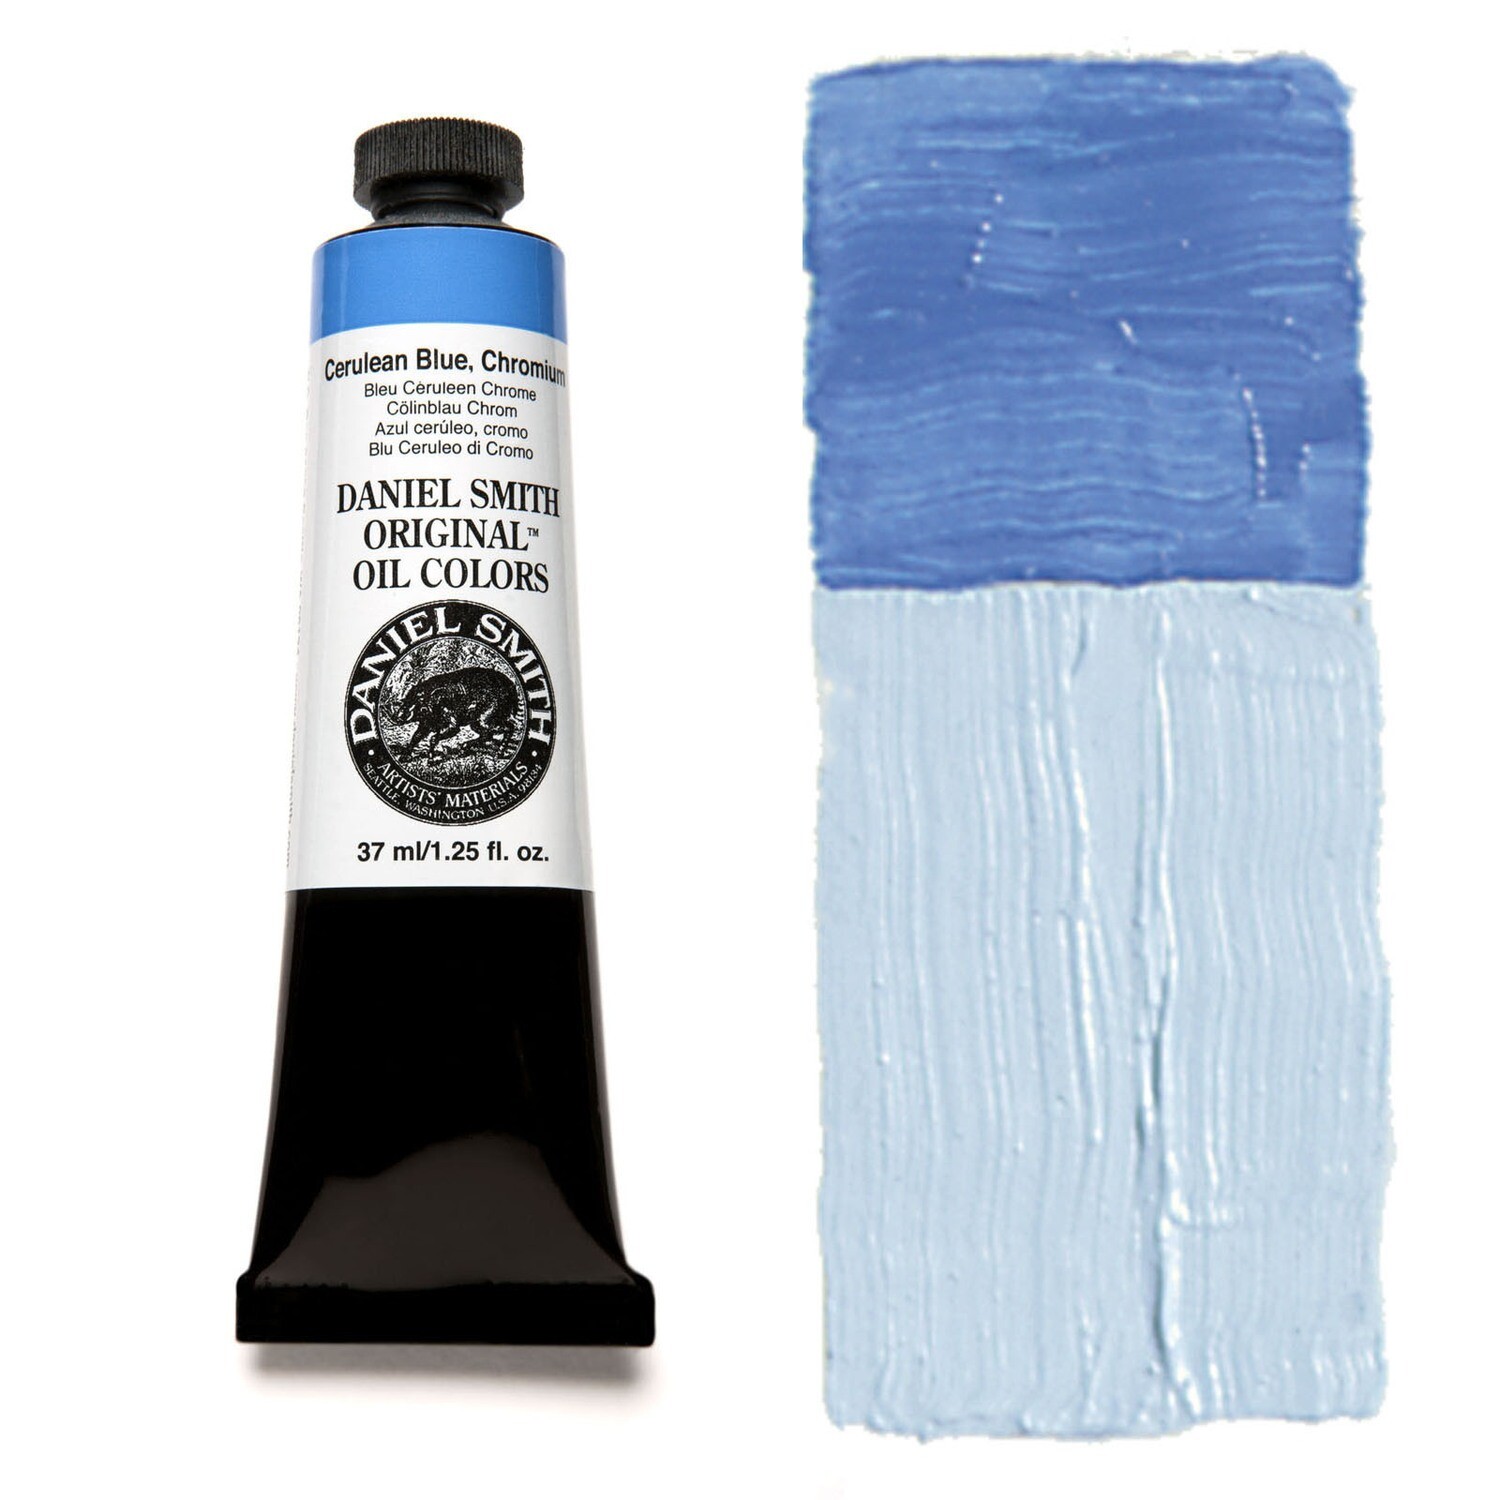 Paint Oil Cerulean Blue Chromium, 37ml/1.25oz Daniel Smith Series 3